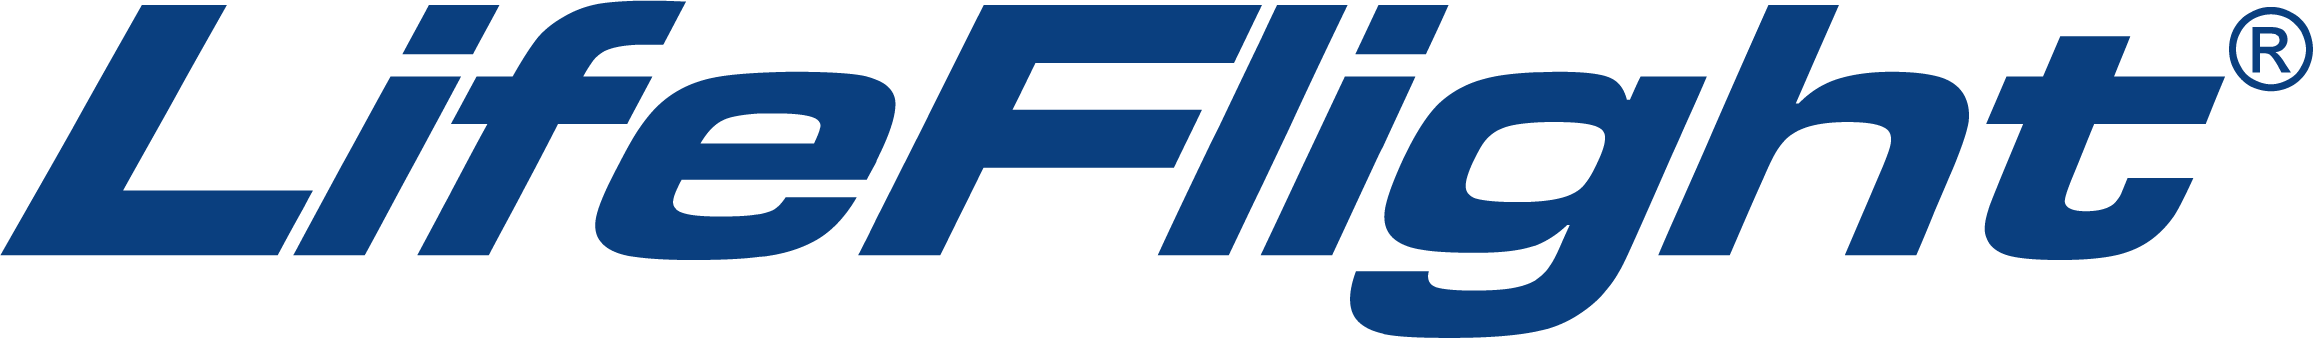 Lifeflight logo